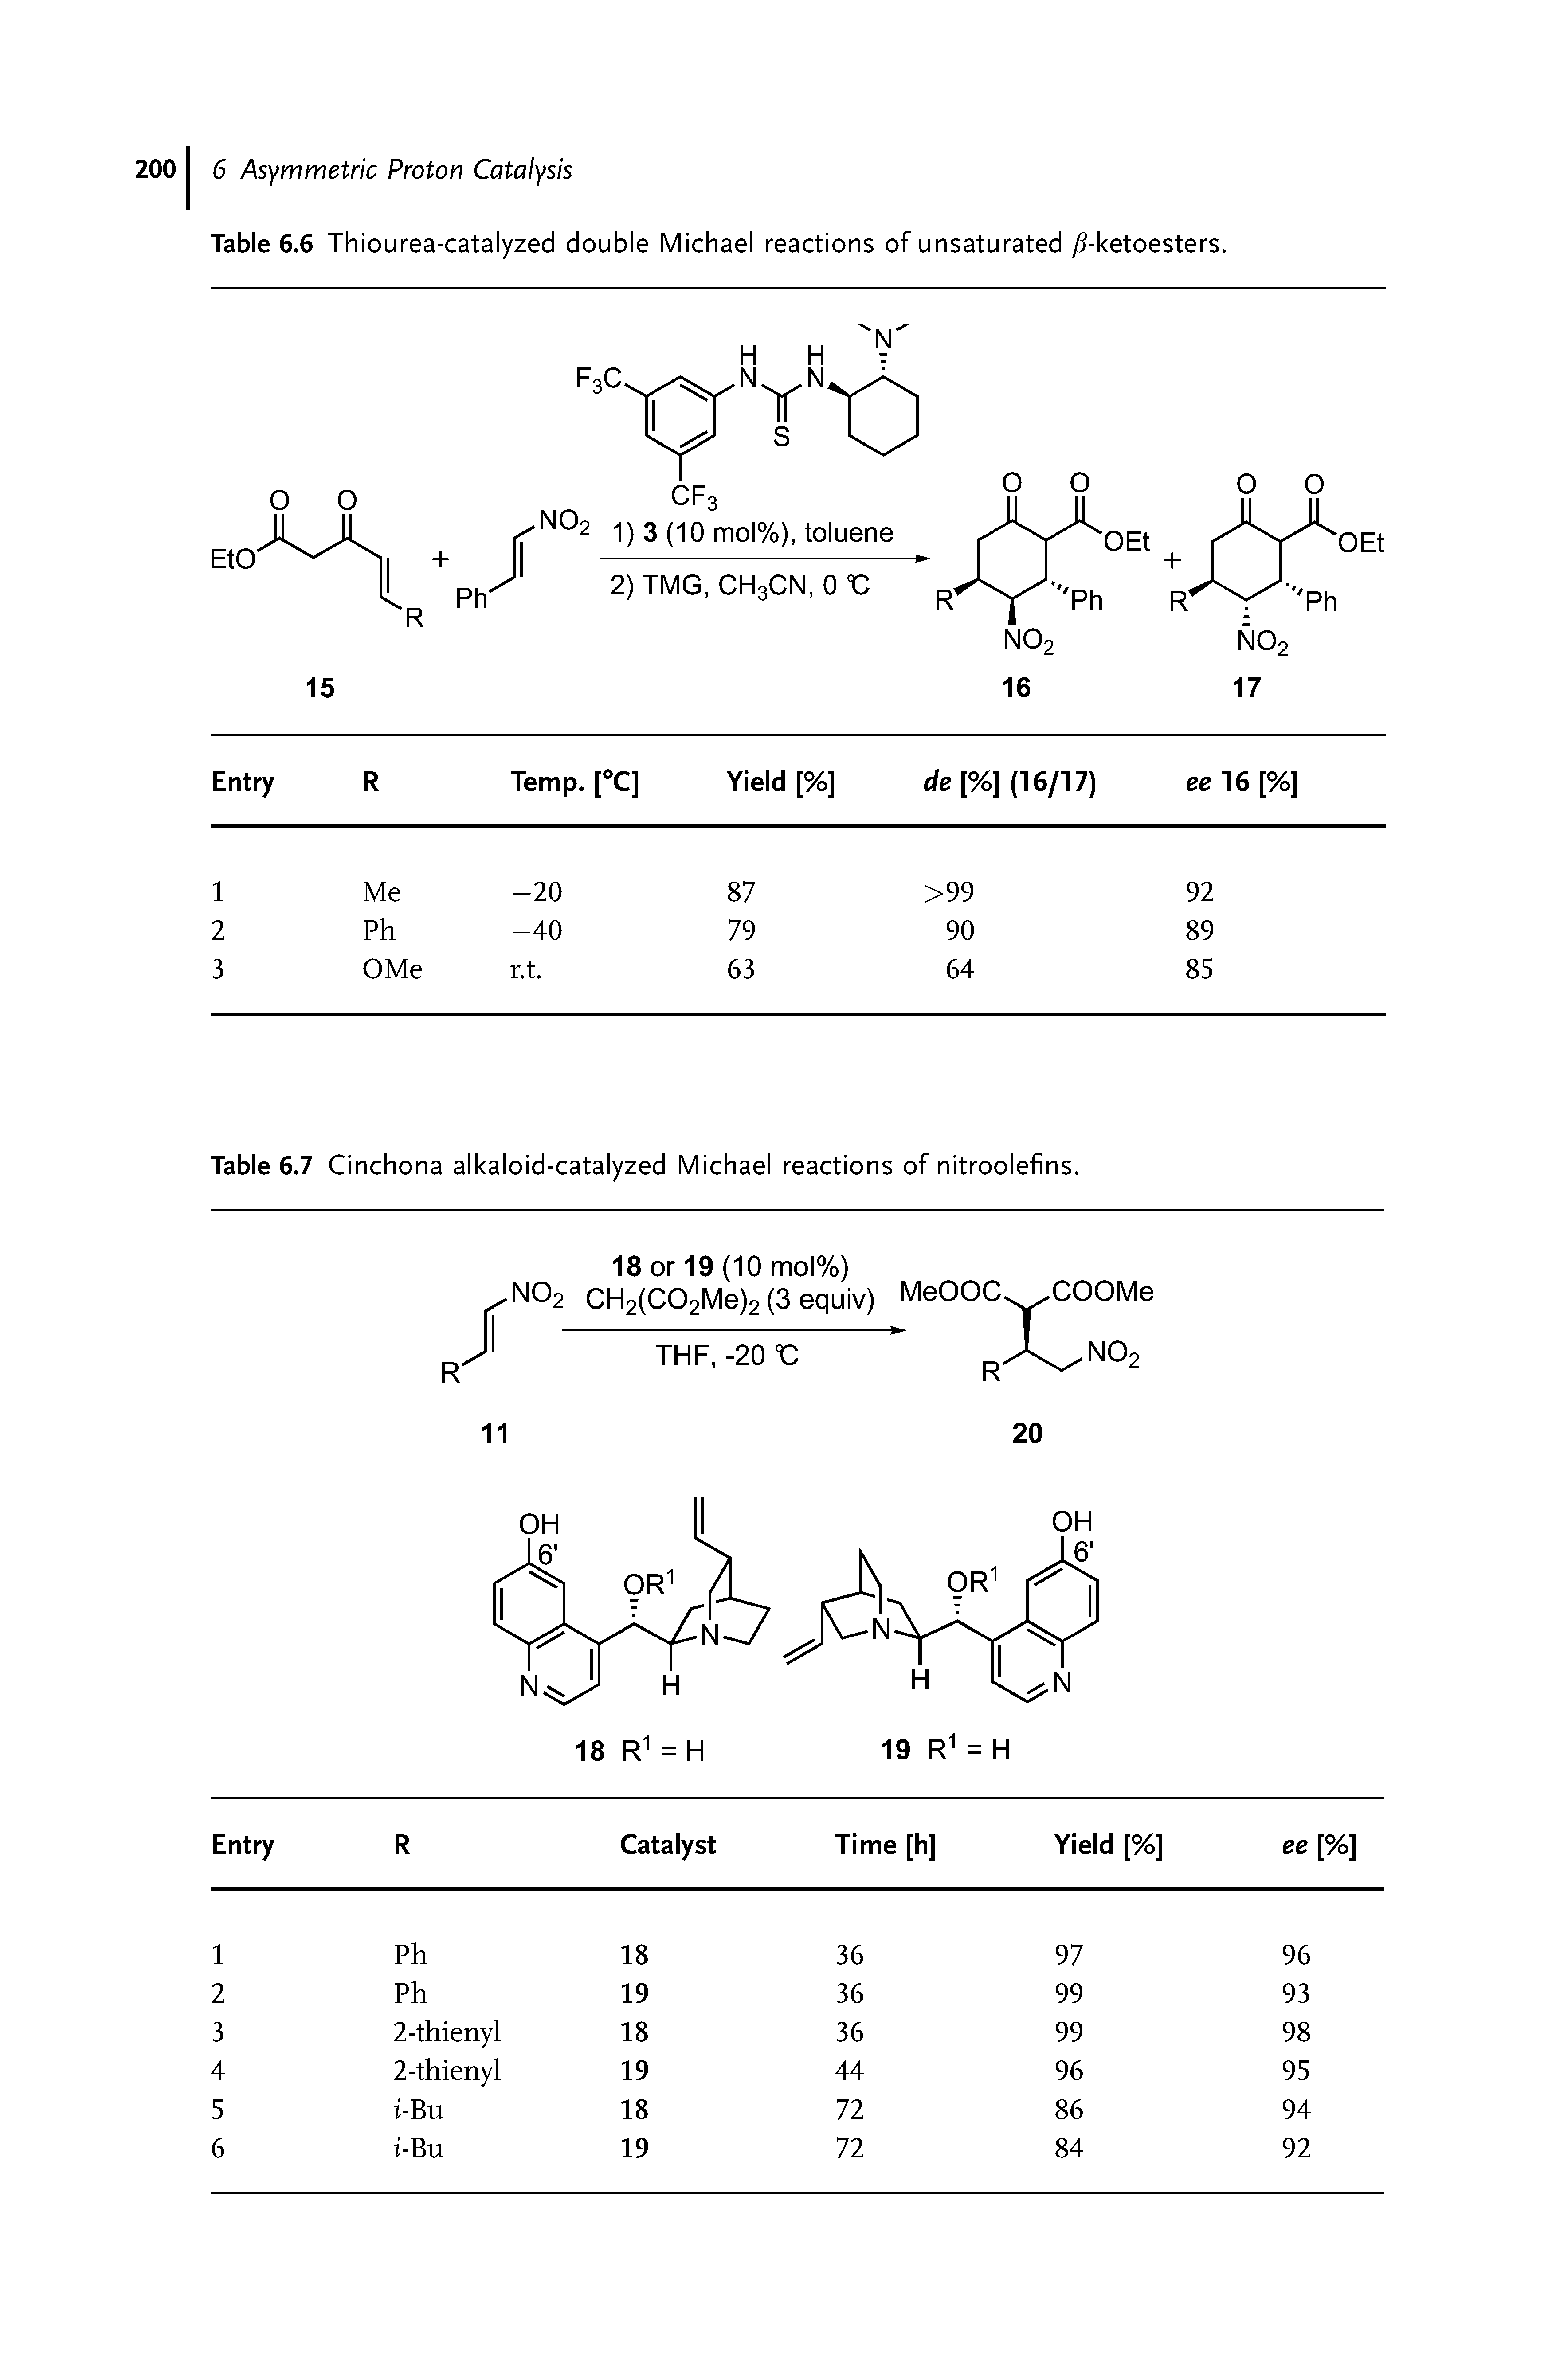 Table 6.7 Cinchona alkaloid-catalyzed Michael reactions of nitroolefins.